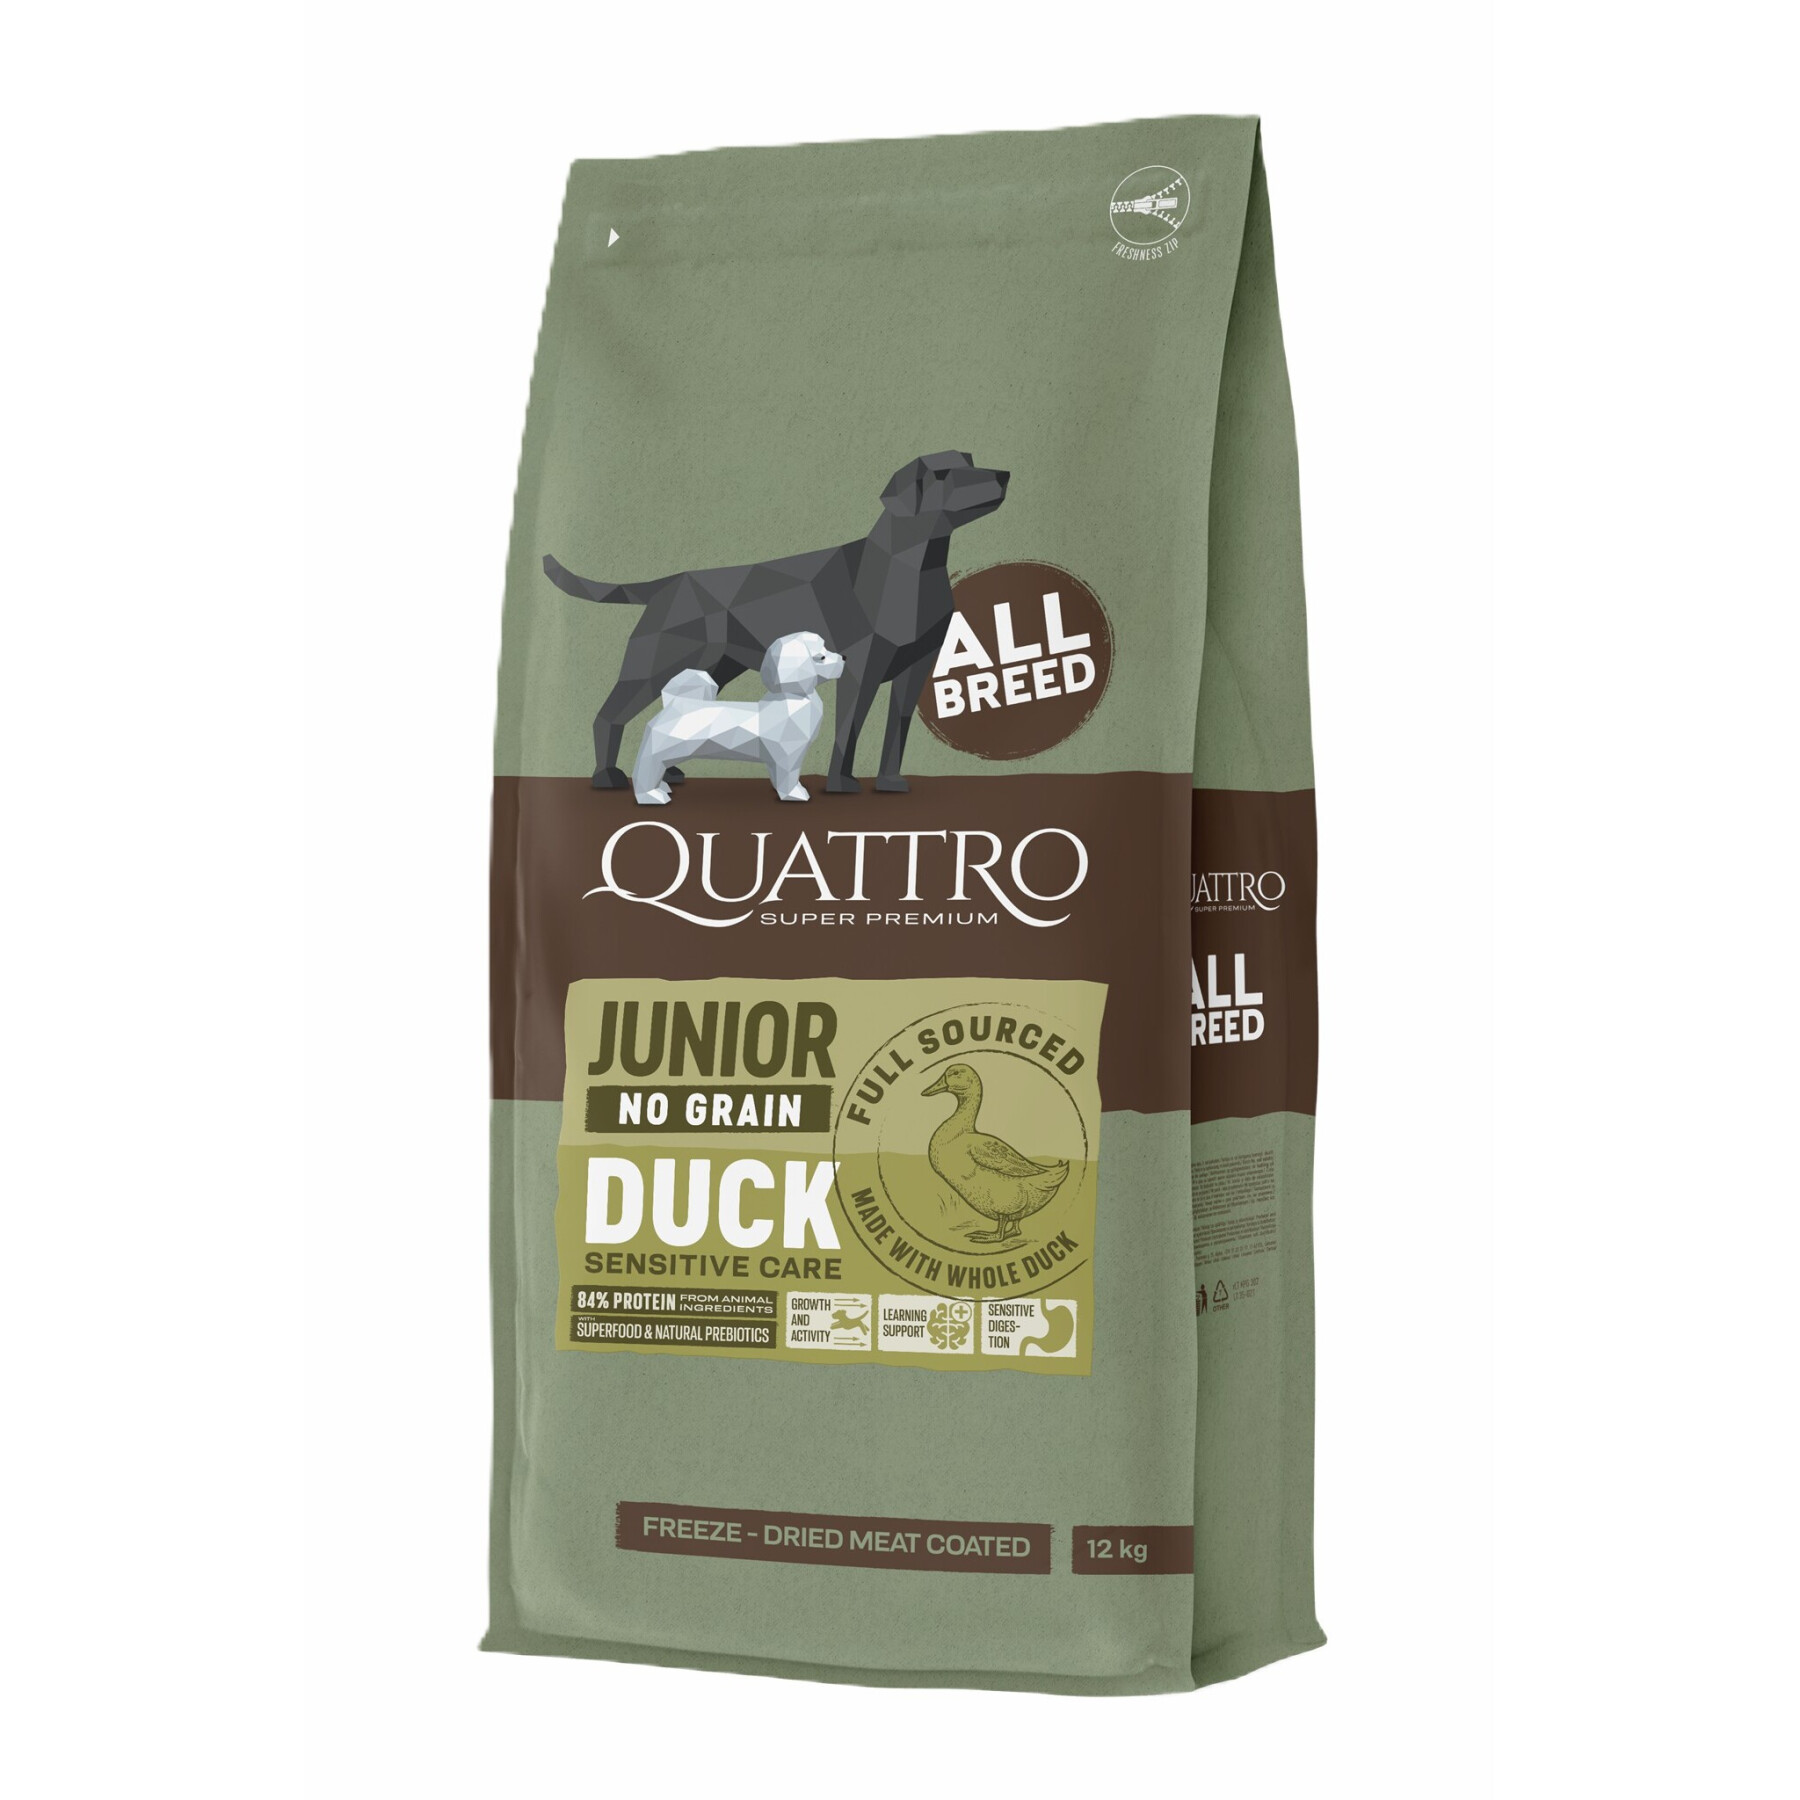 Hundekroketten für alle Rassen ohne Getreide Ente BUBU Pets Quatro Super Premium